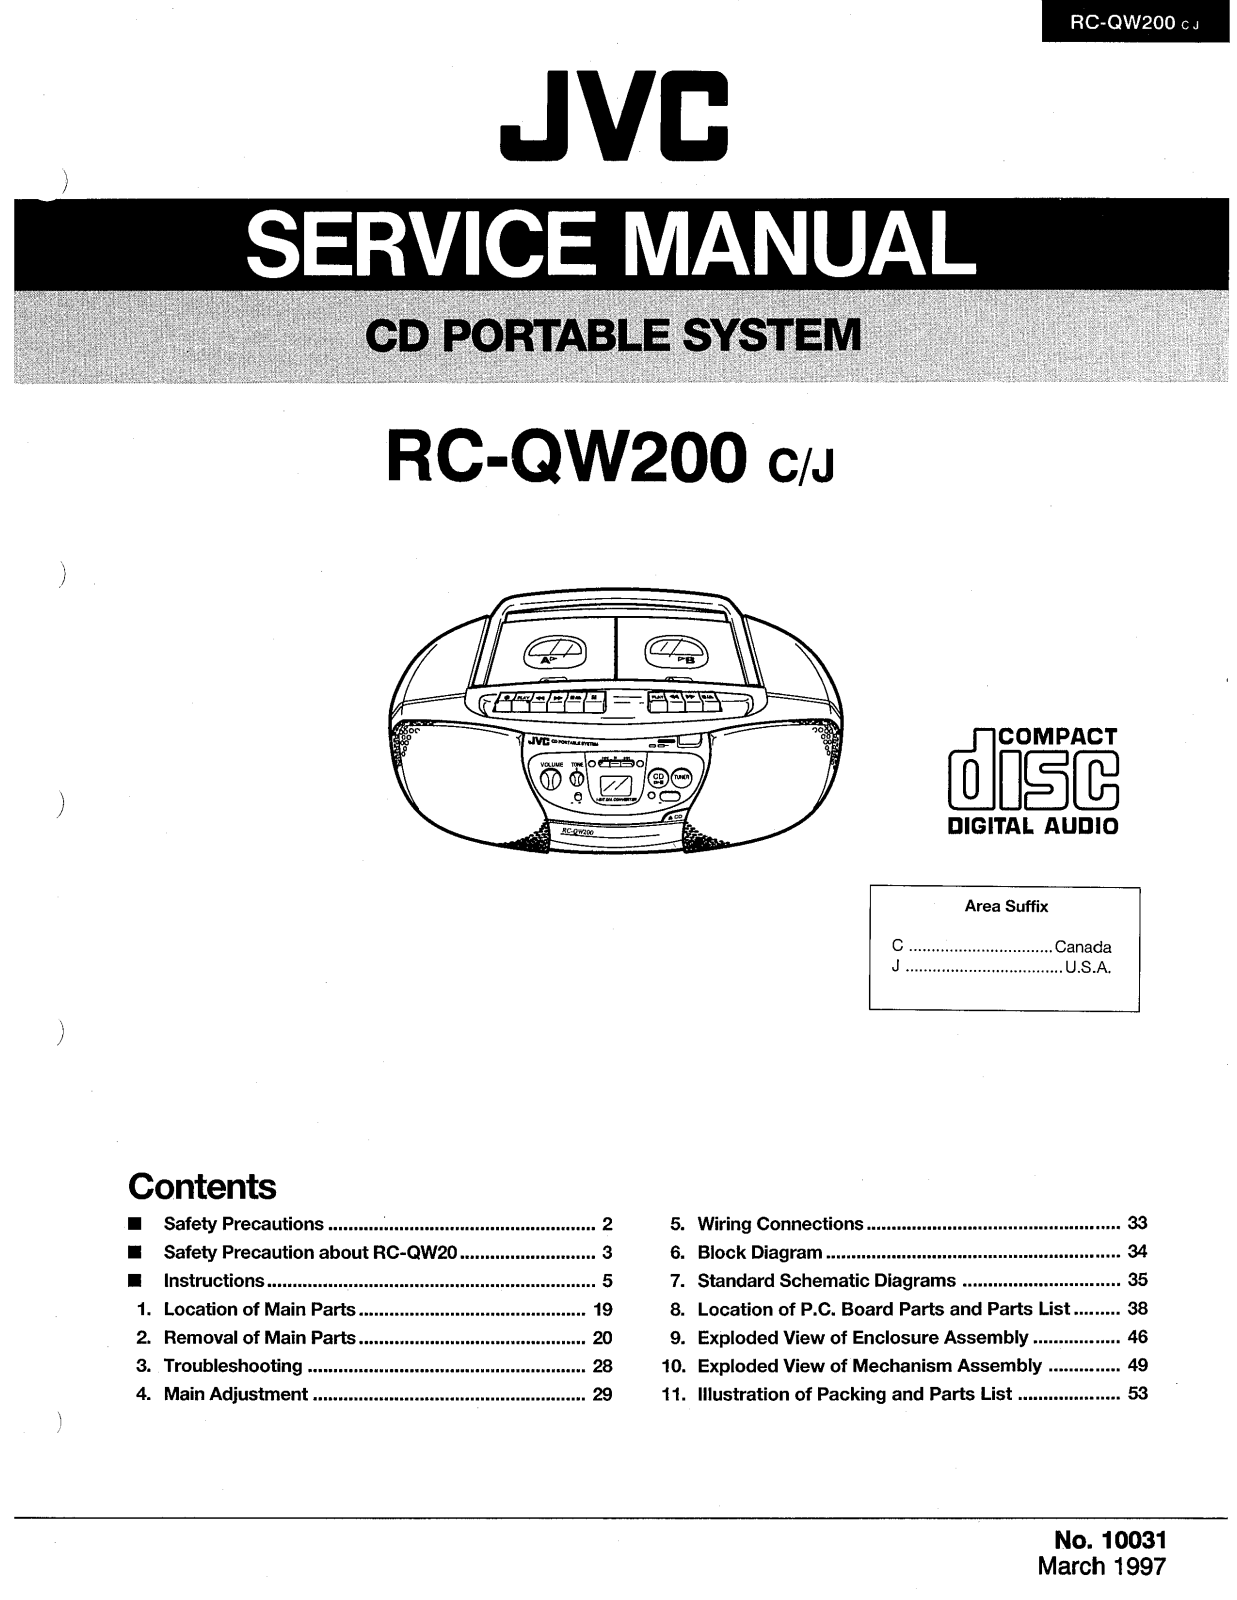 JVC RC-QW200BKC, RC-QW200BKJ Service Manual